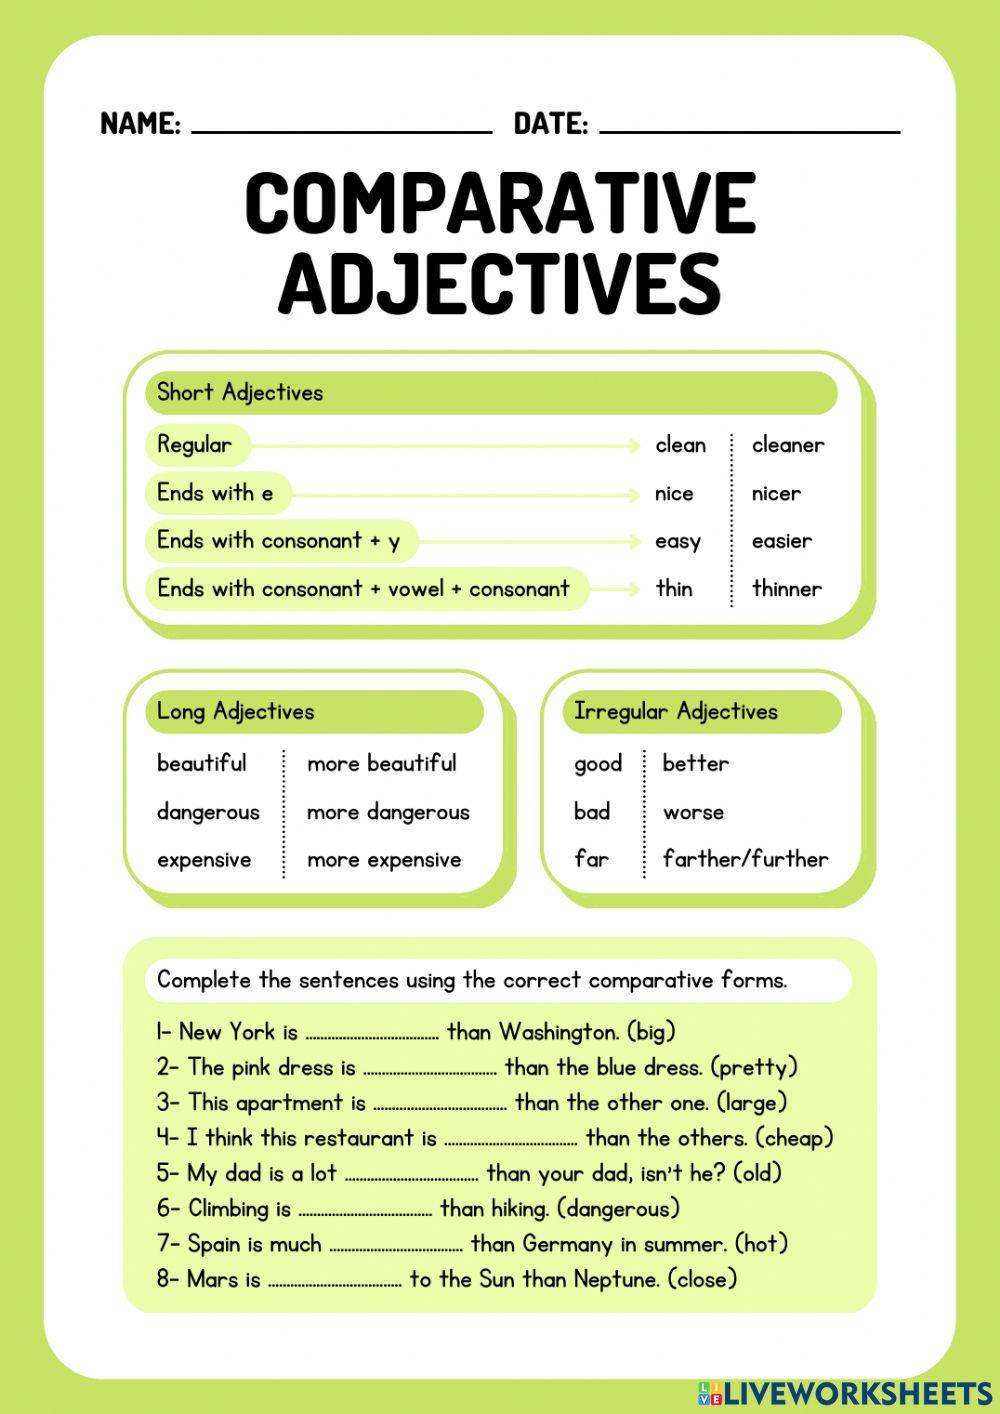 Grammar Worksheets ответы ad. Grammar Worksheets adjectives describing places ответы. Degrees of Comparison of adverbs Rules. Degrees of comparison of adverbs